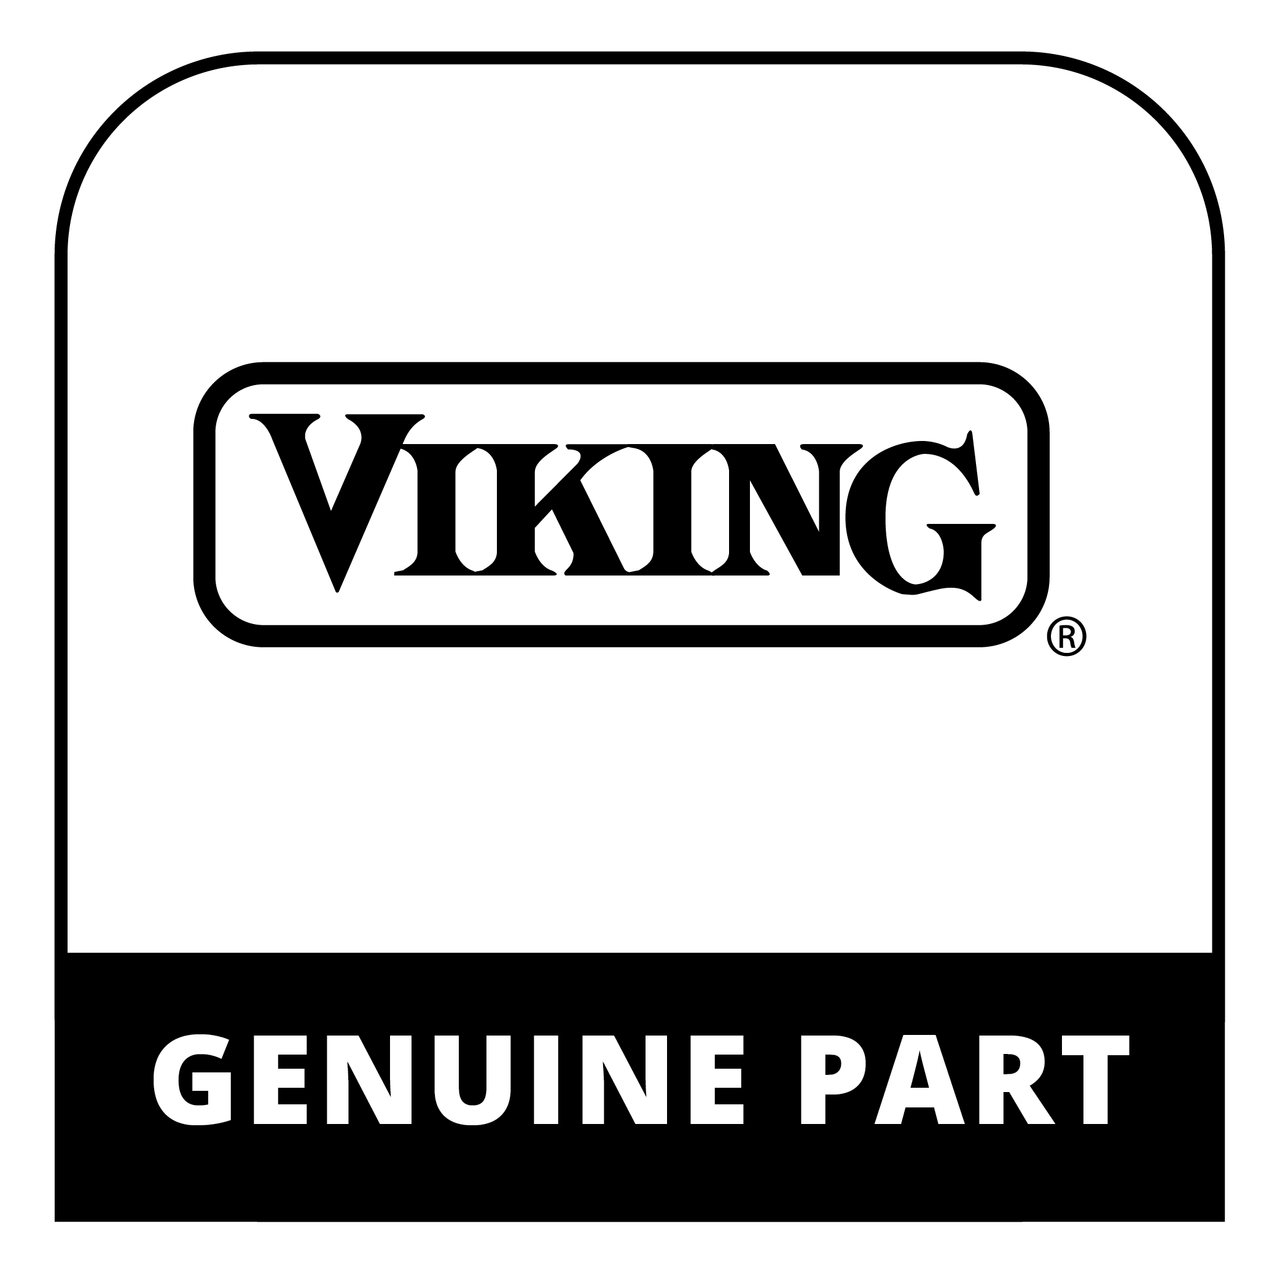 Viking 070991-000 - Interface To Led Board - Center Module (Domino) - Genuine Viking Part